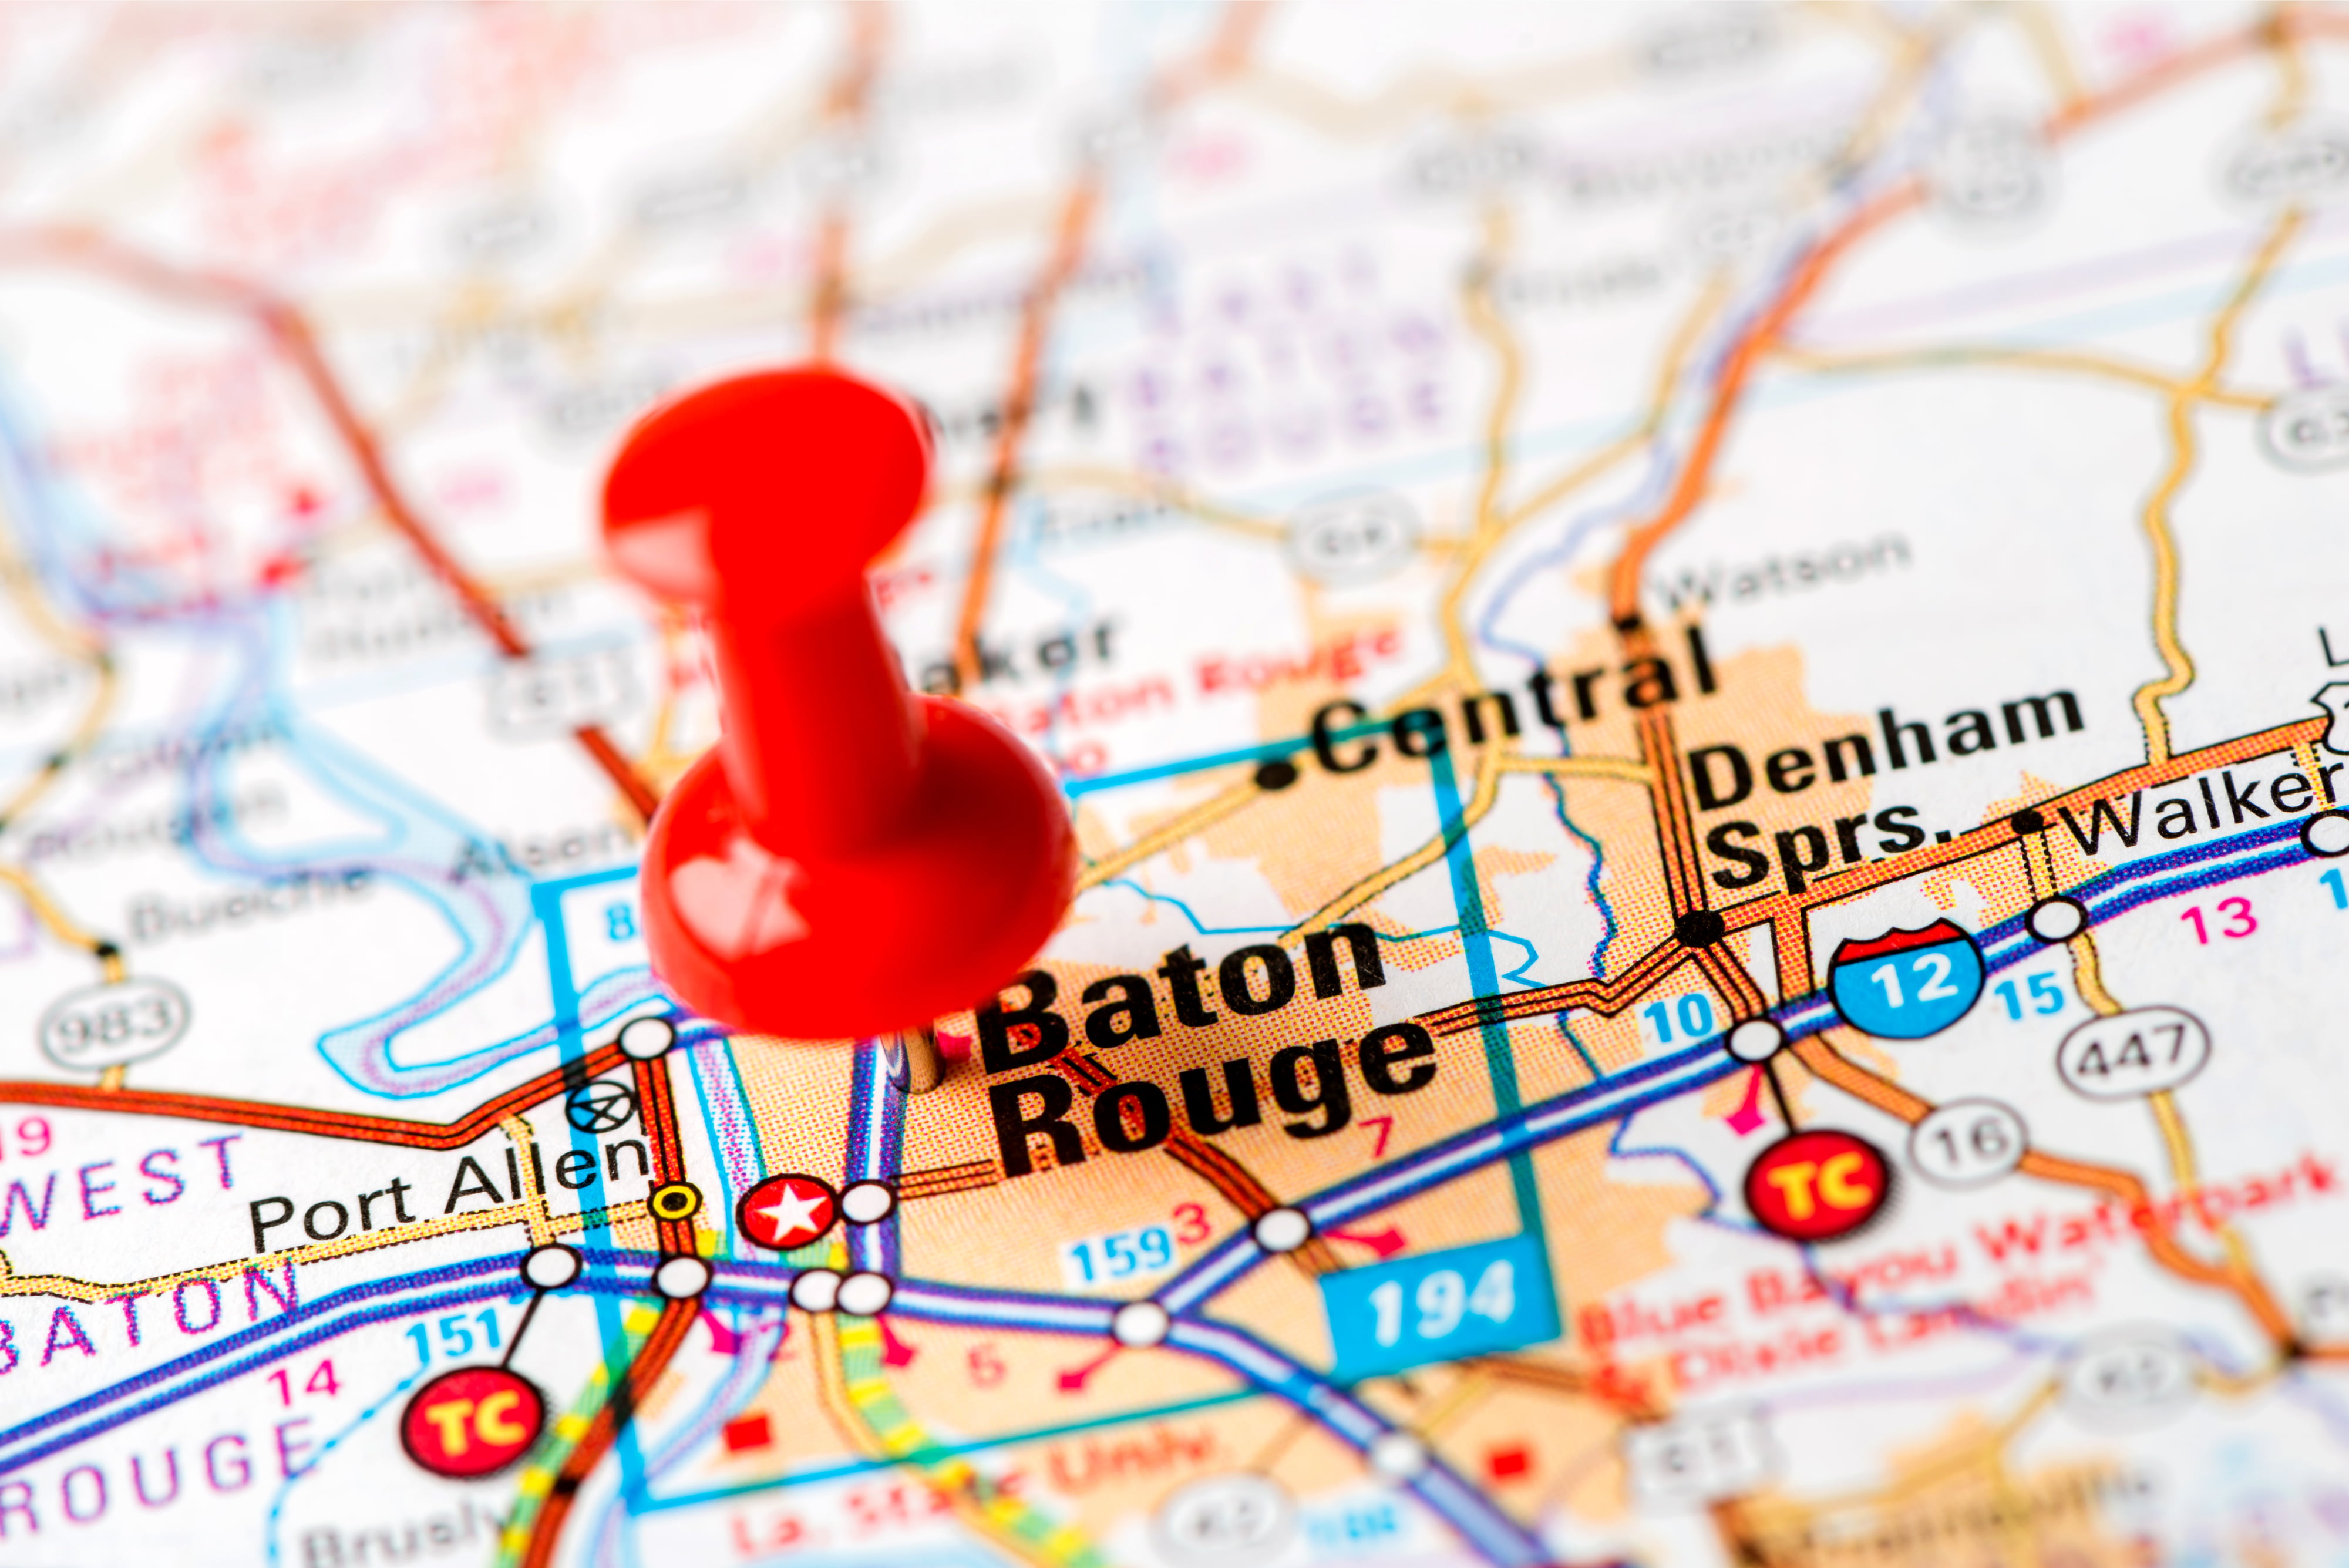 Baton Rouge, Louisiana map